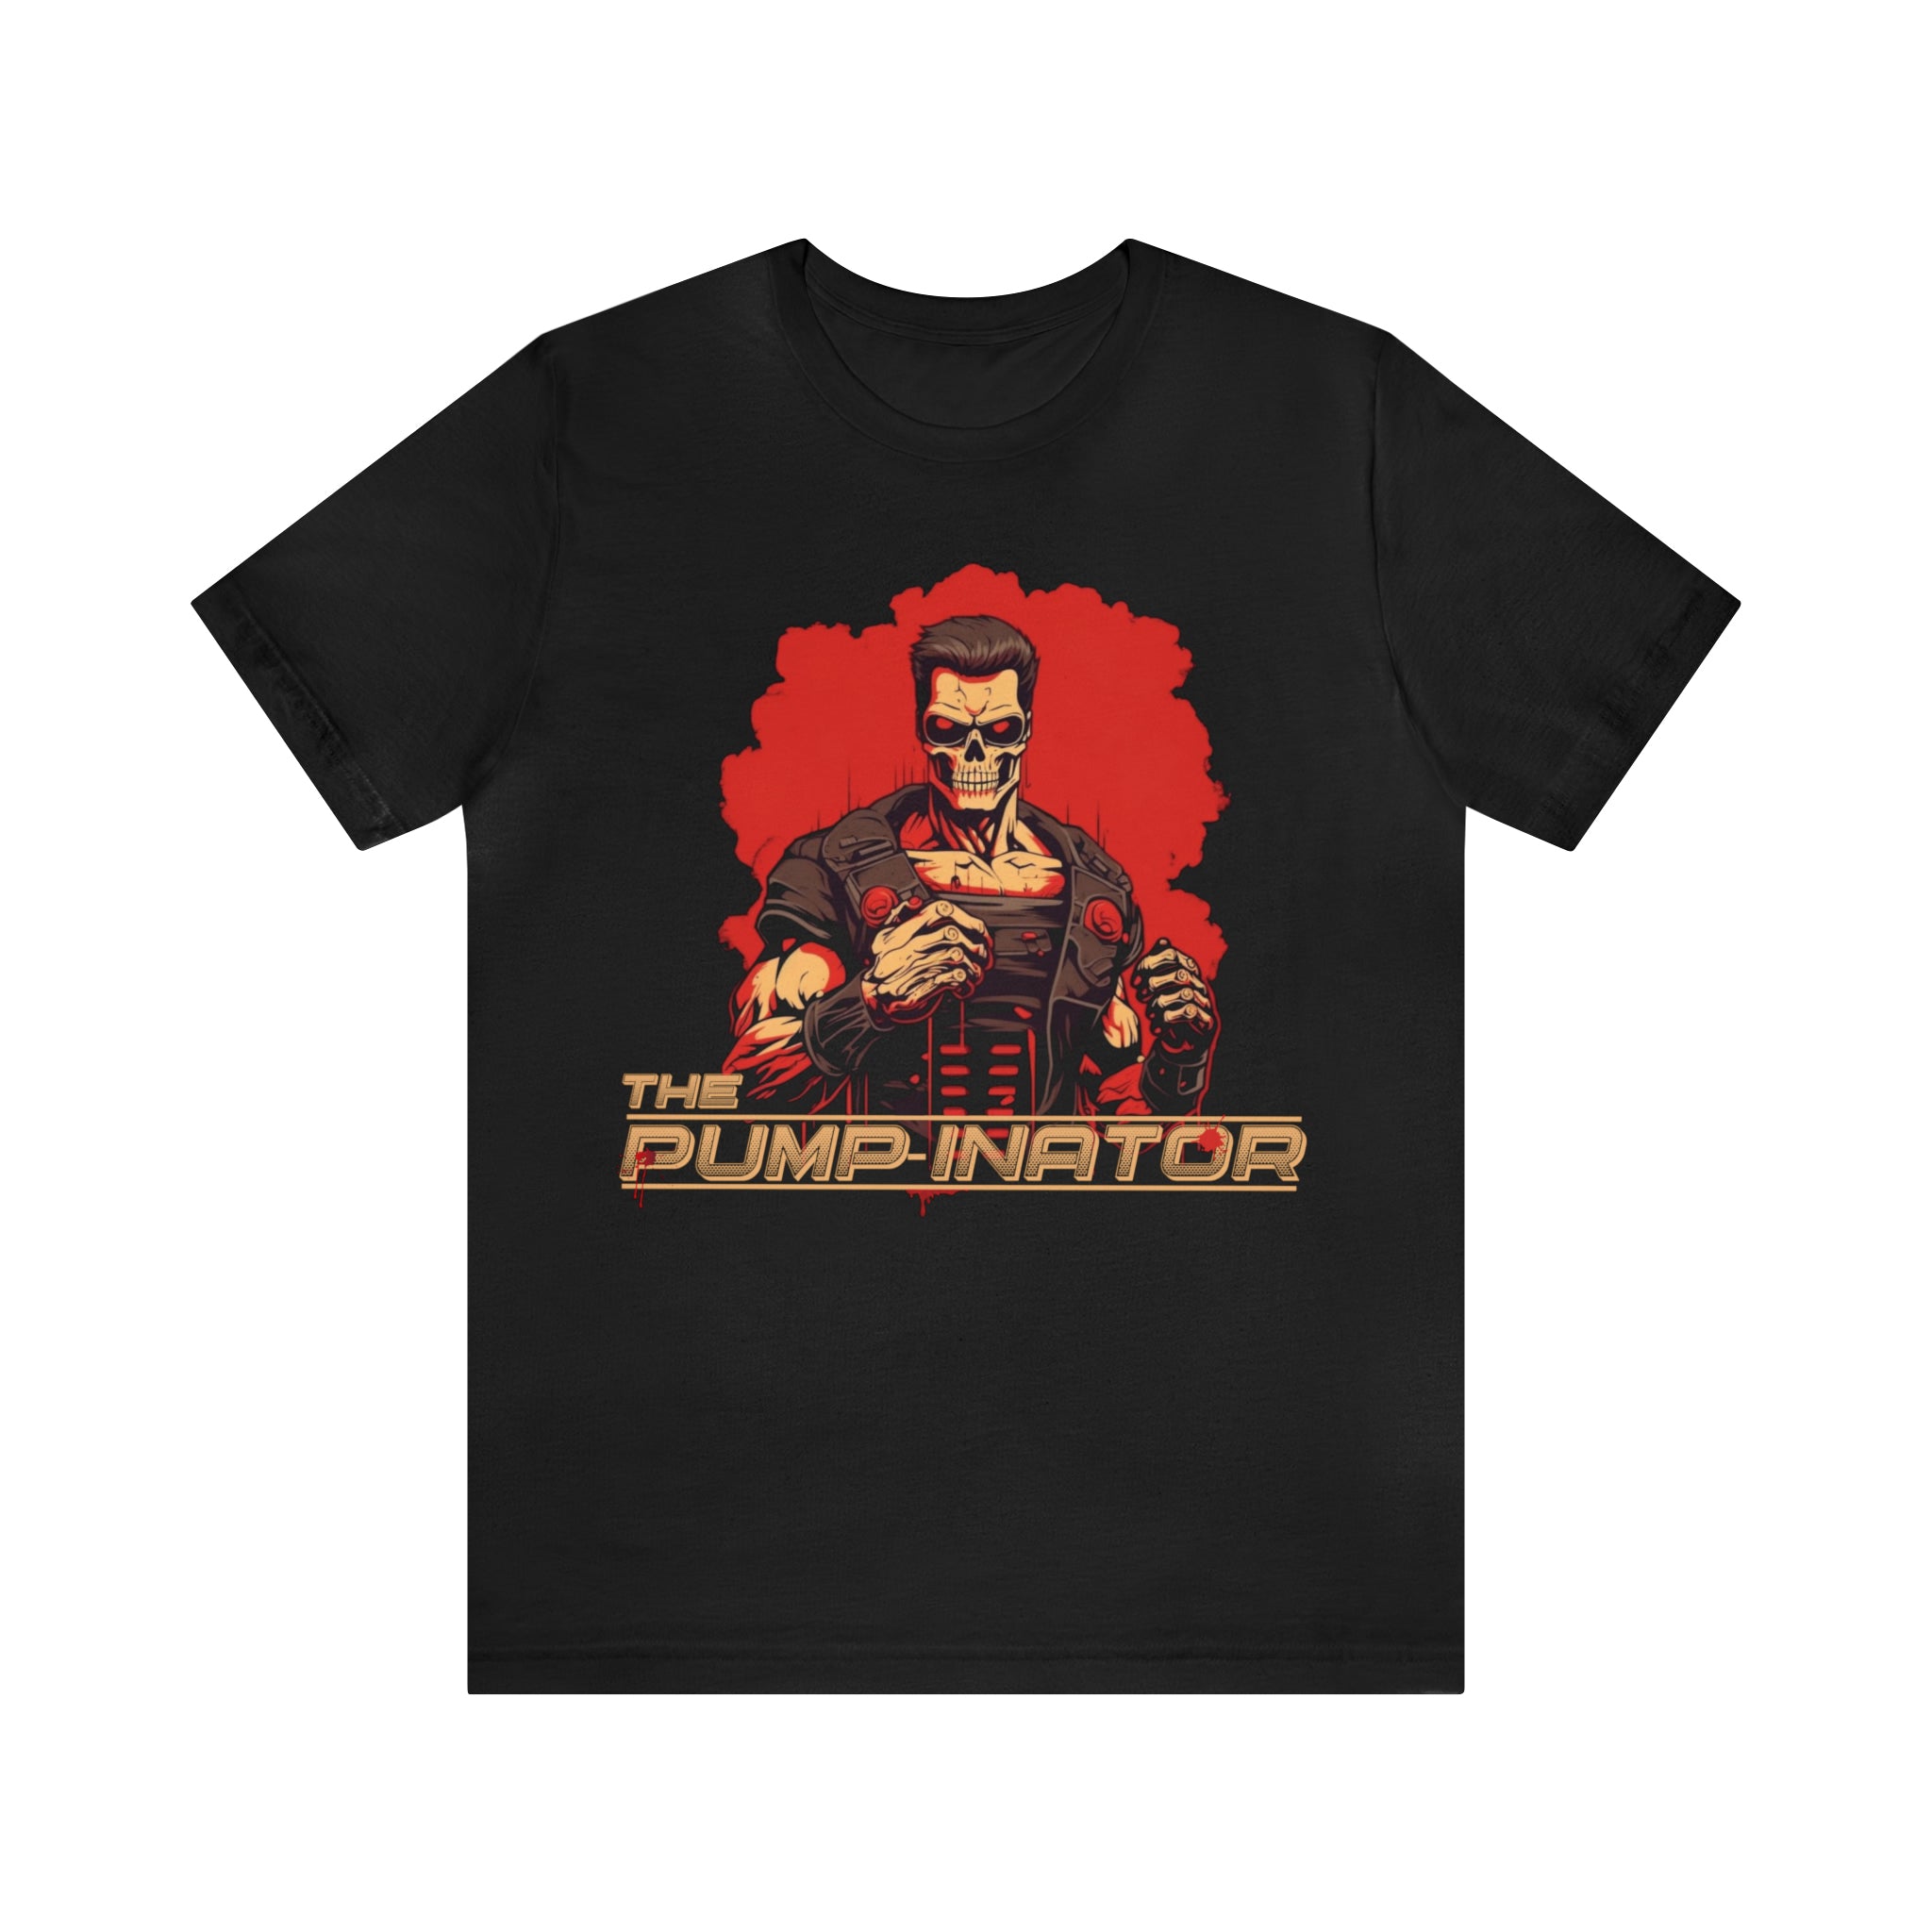 Pump-inator Unisex T-shirt